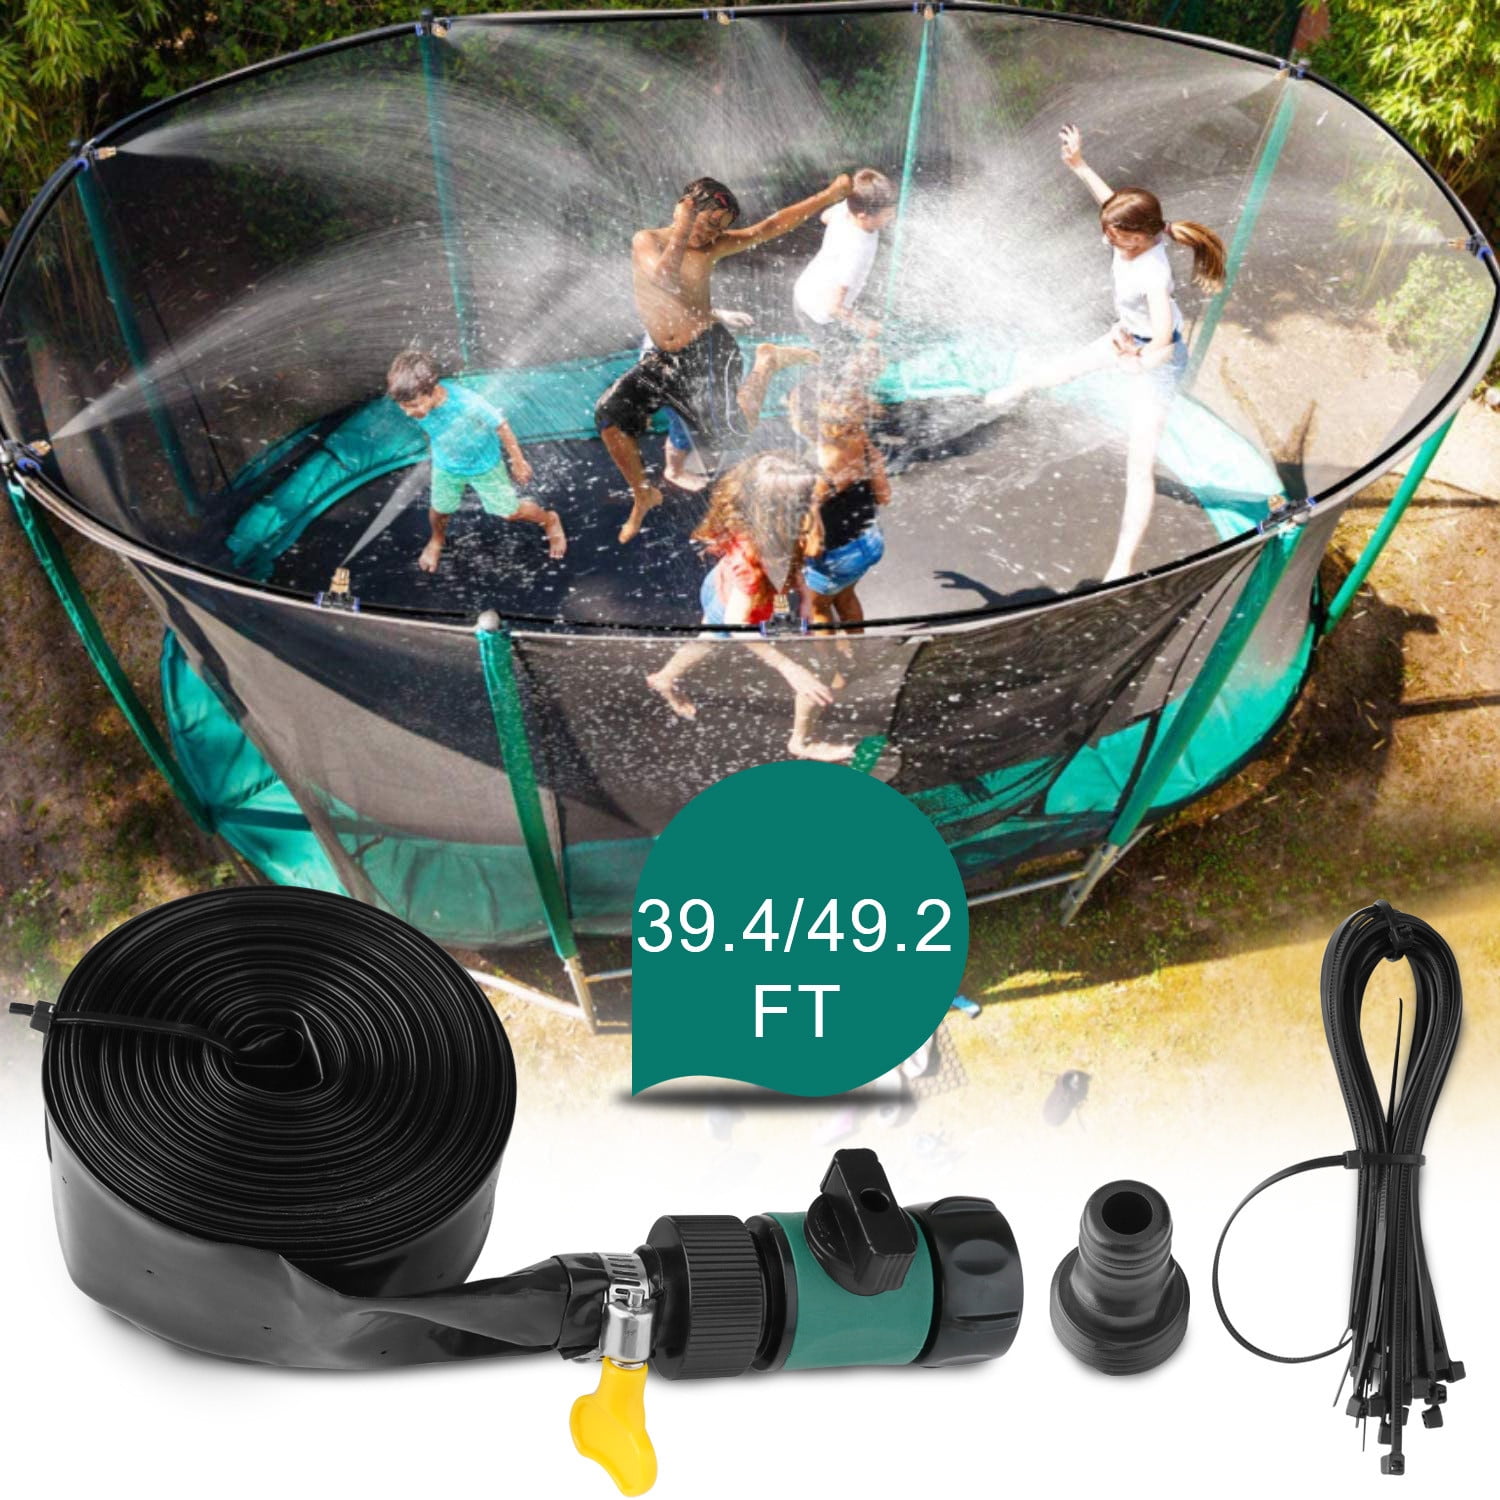 Trampoline Water Game Sprinkler For Kids Outdoor Summer Fun Backyard Waterpark 